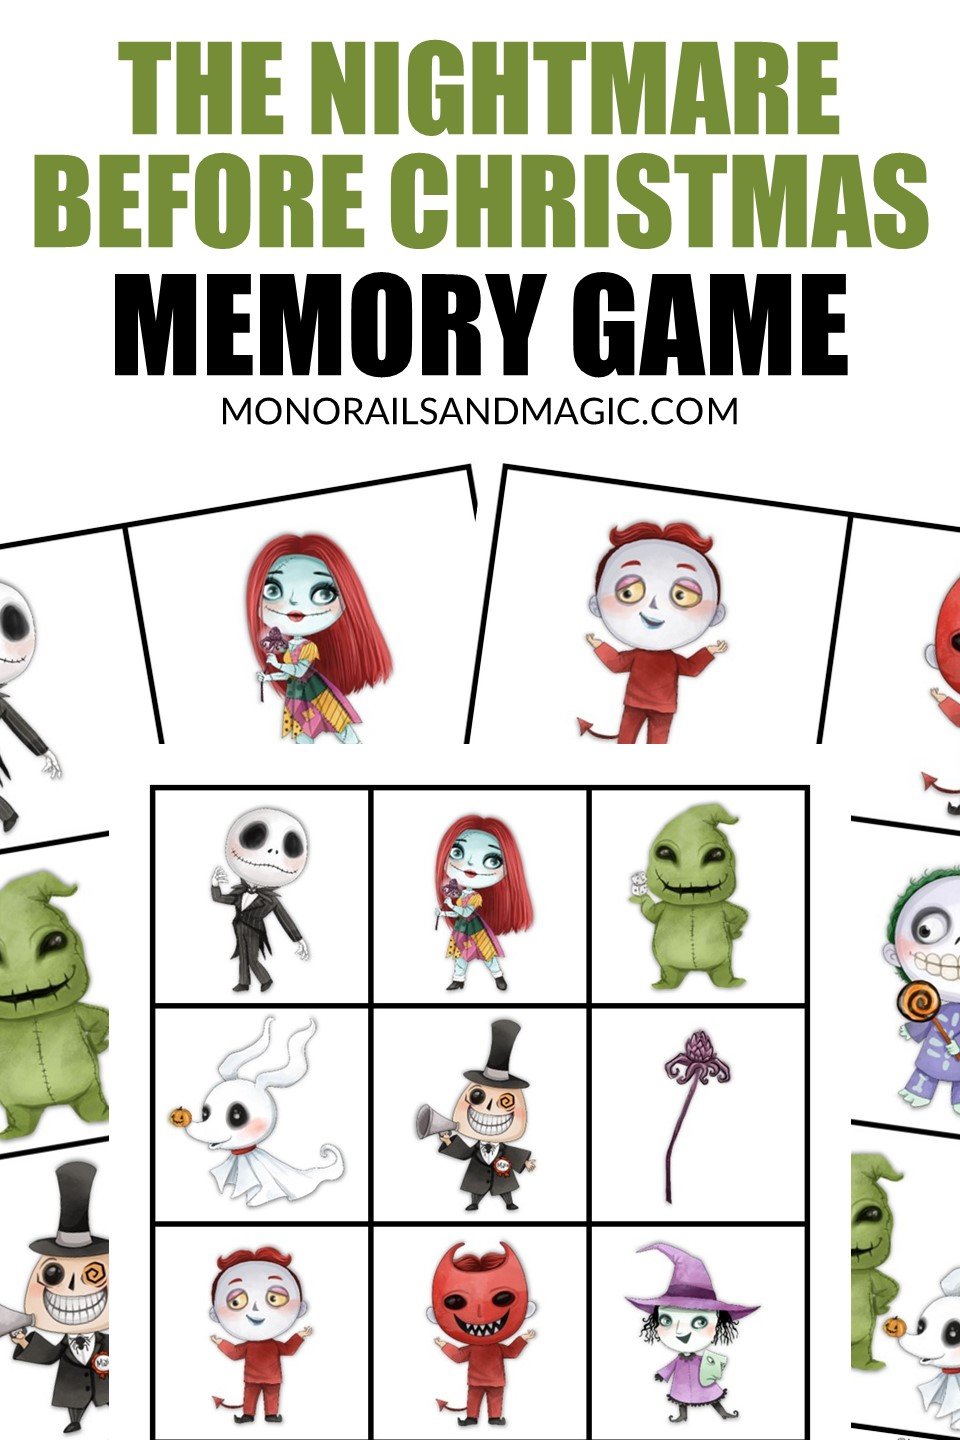 Free printable The Nightmare Before Christmas memory game for kids.